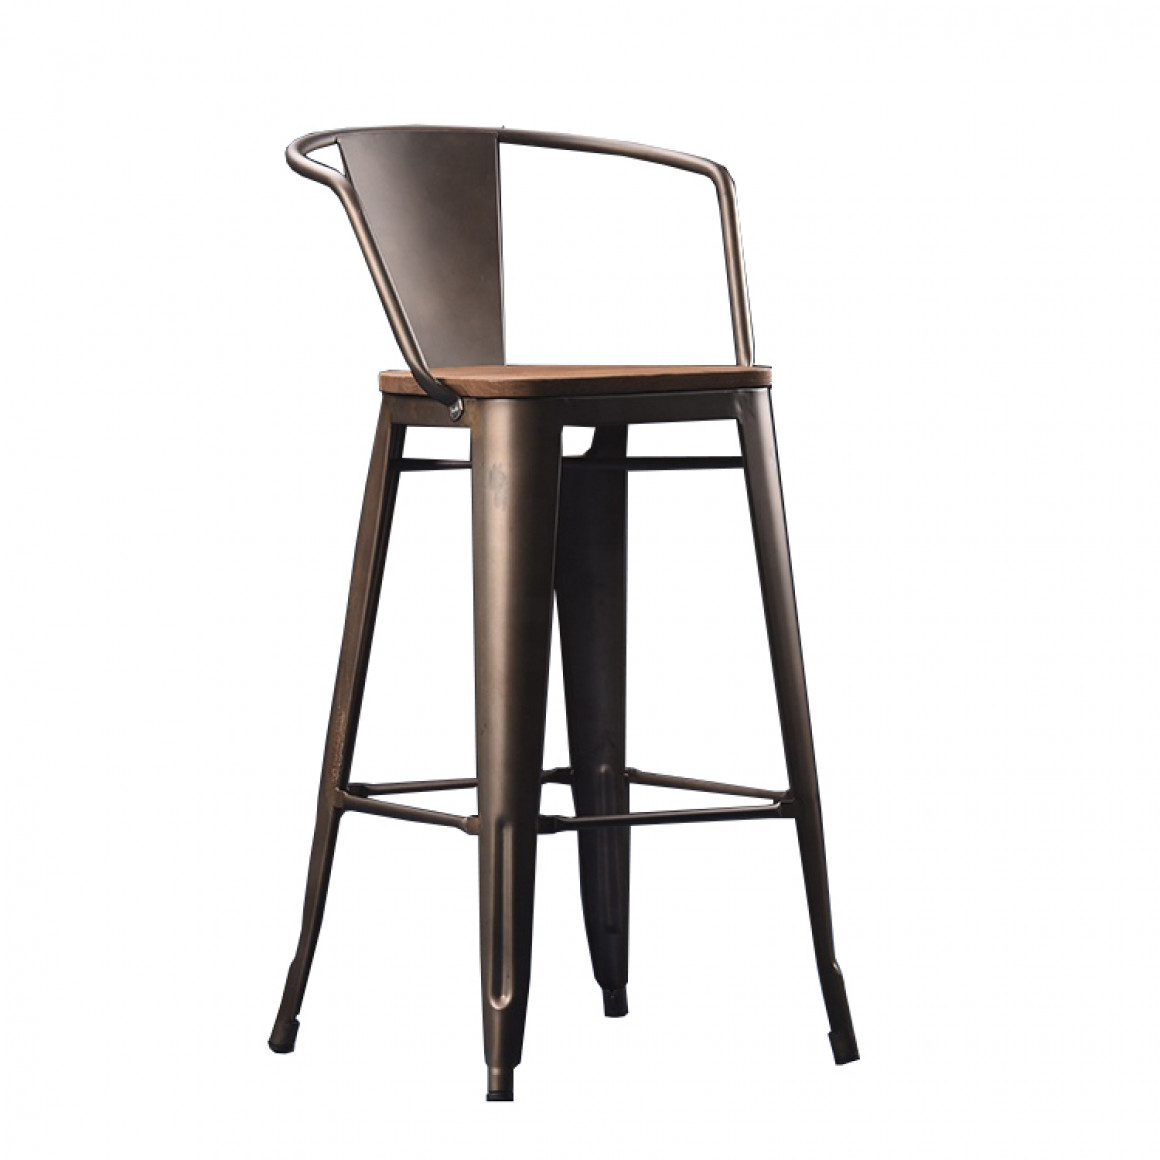 Chair: steel frame, elm wood seat, rusty